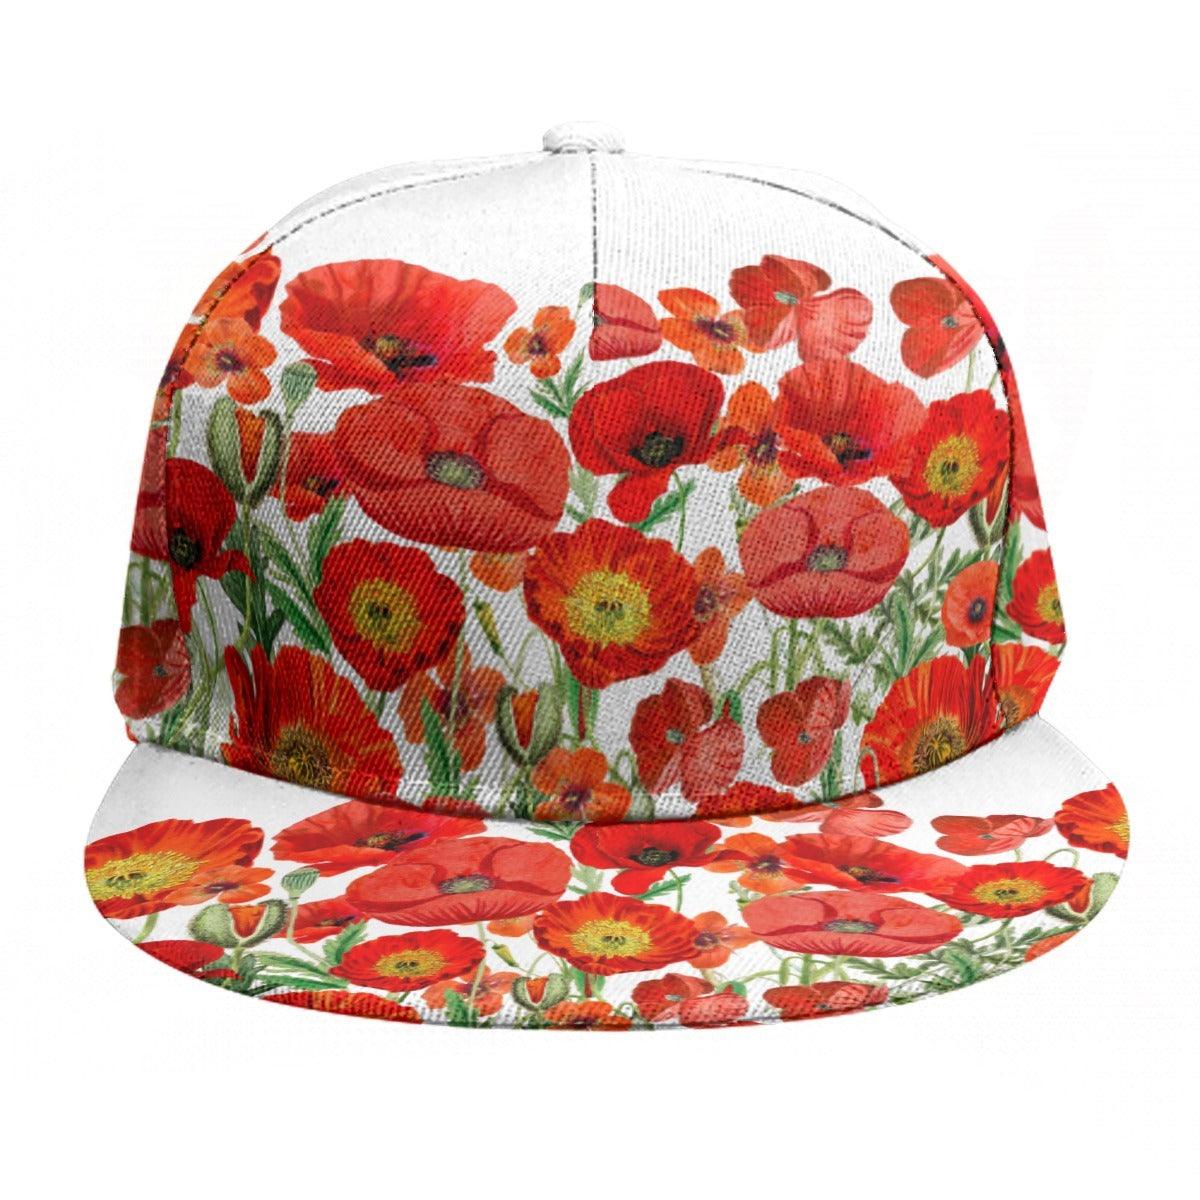 Flat Brim Hat- Poppies - Premium  from Elementologie - Just $12.99! Shop now at Elementologie